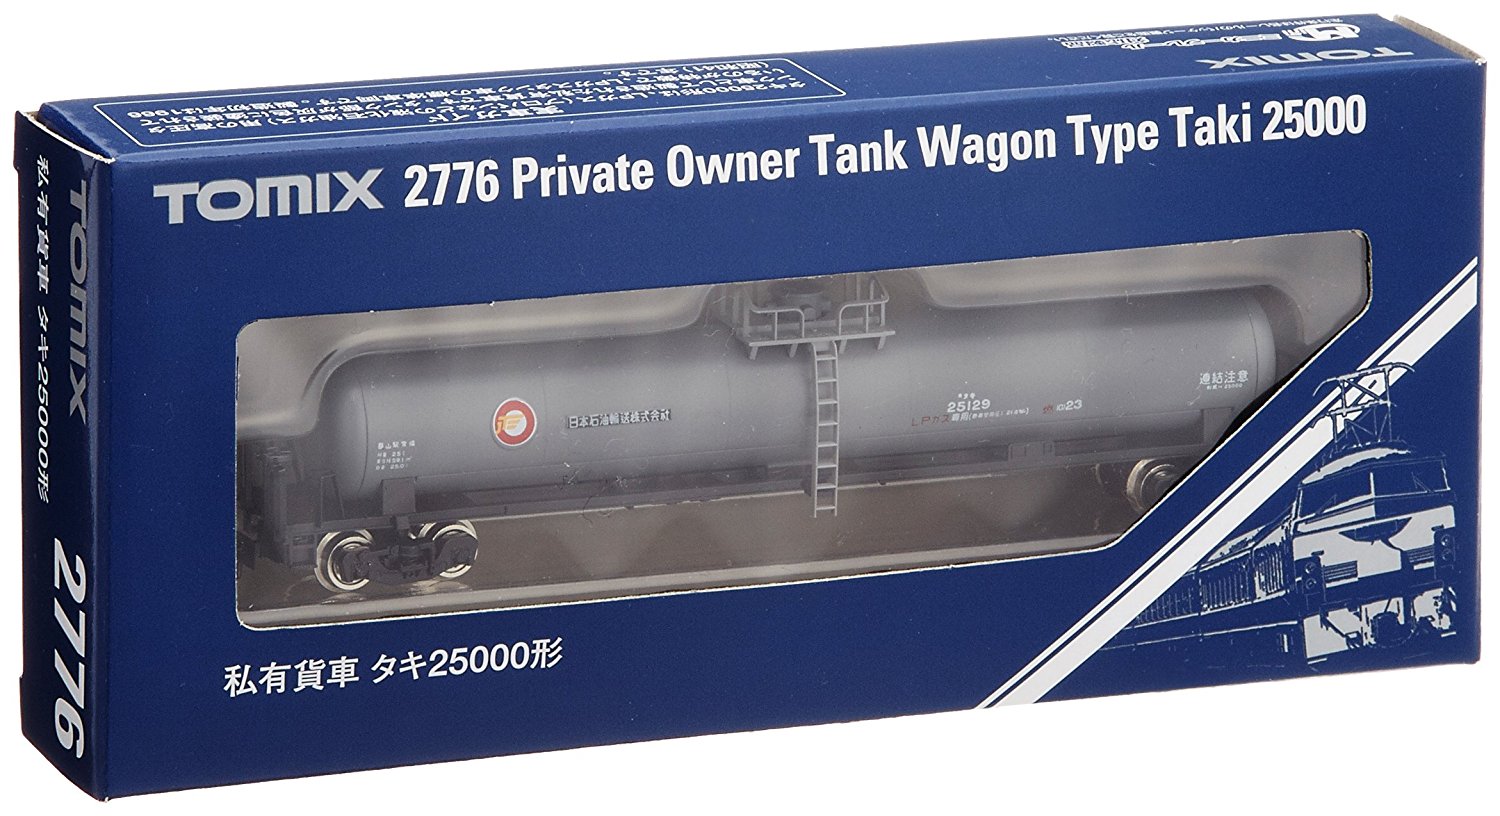 Private Owner Tank Wagon Type Taki 25000 (1-Car)